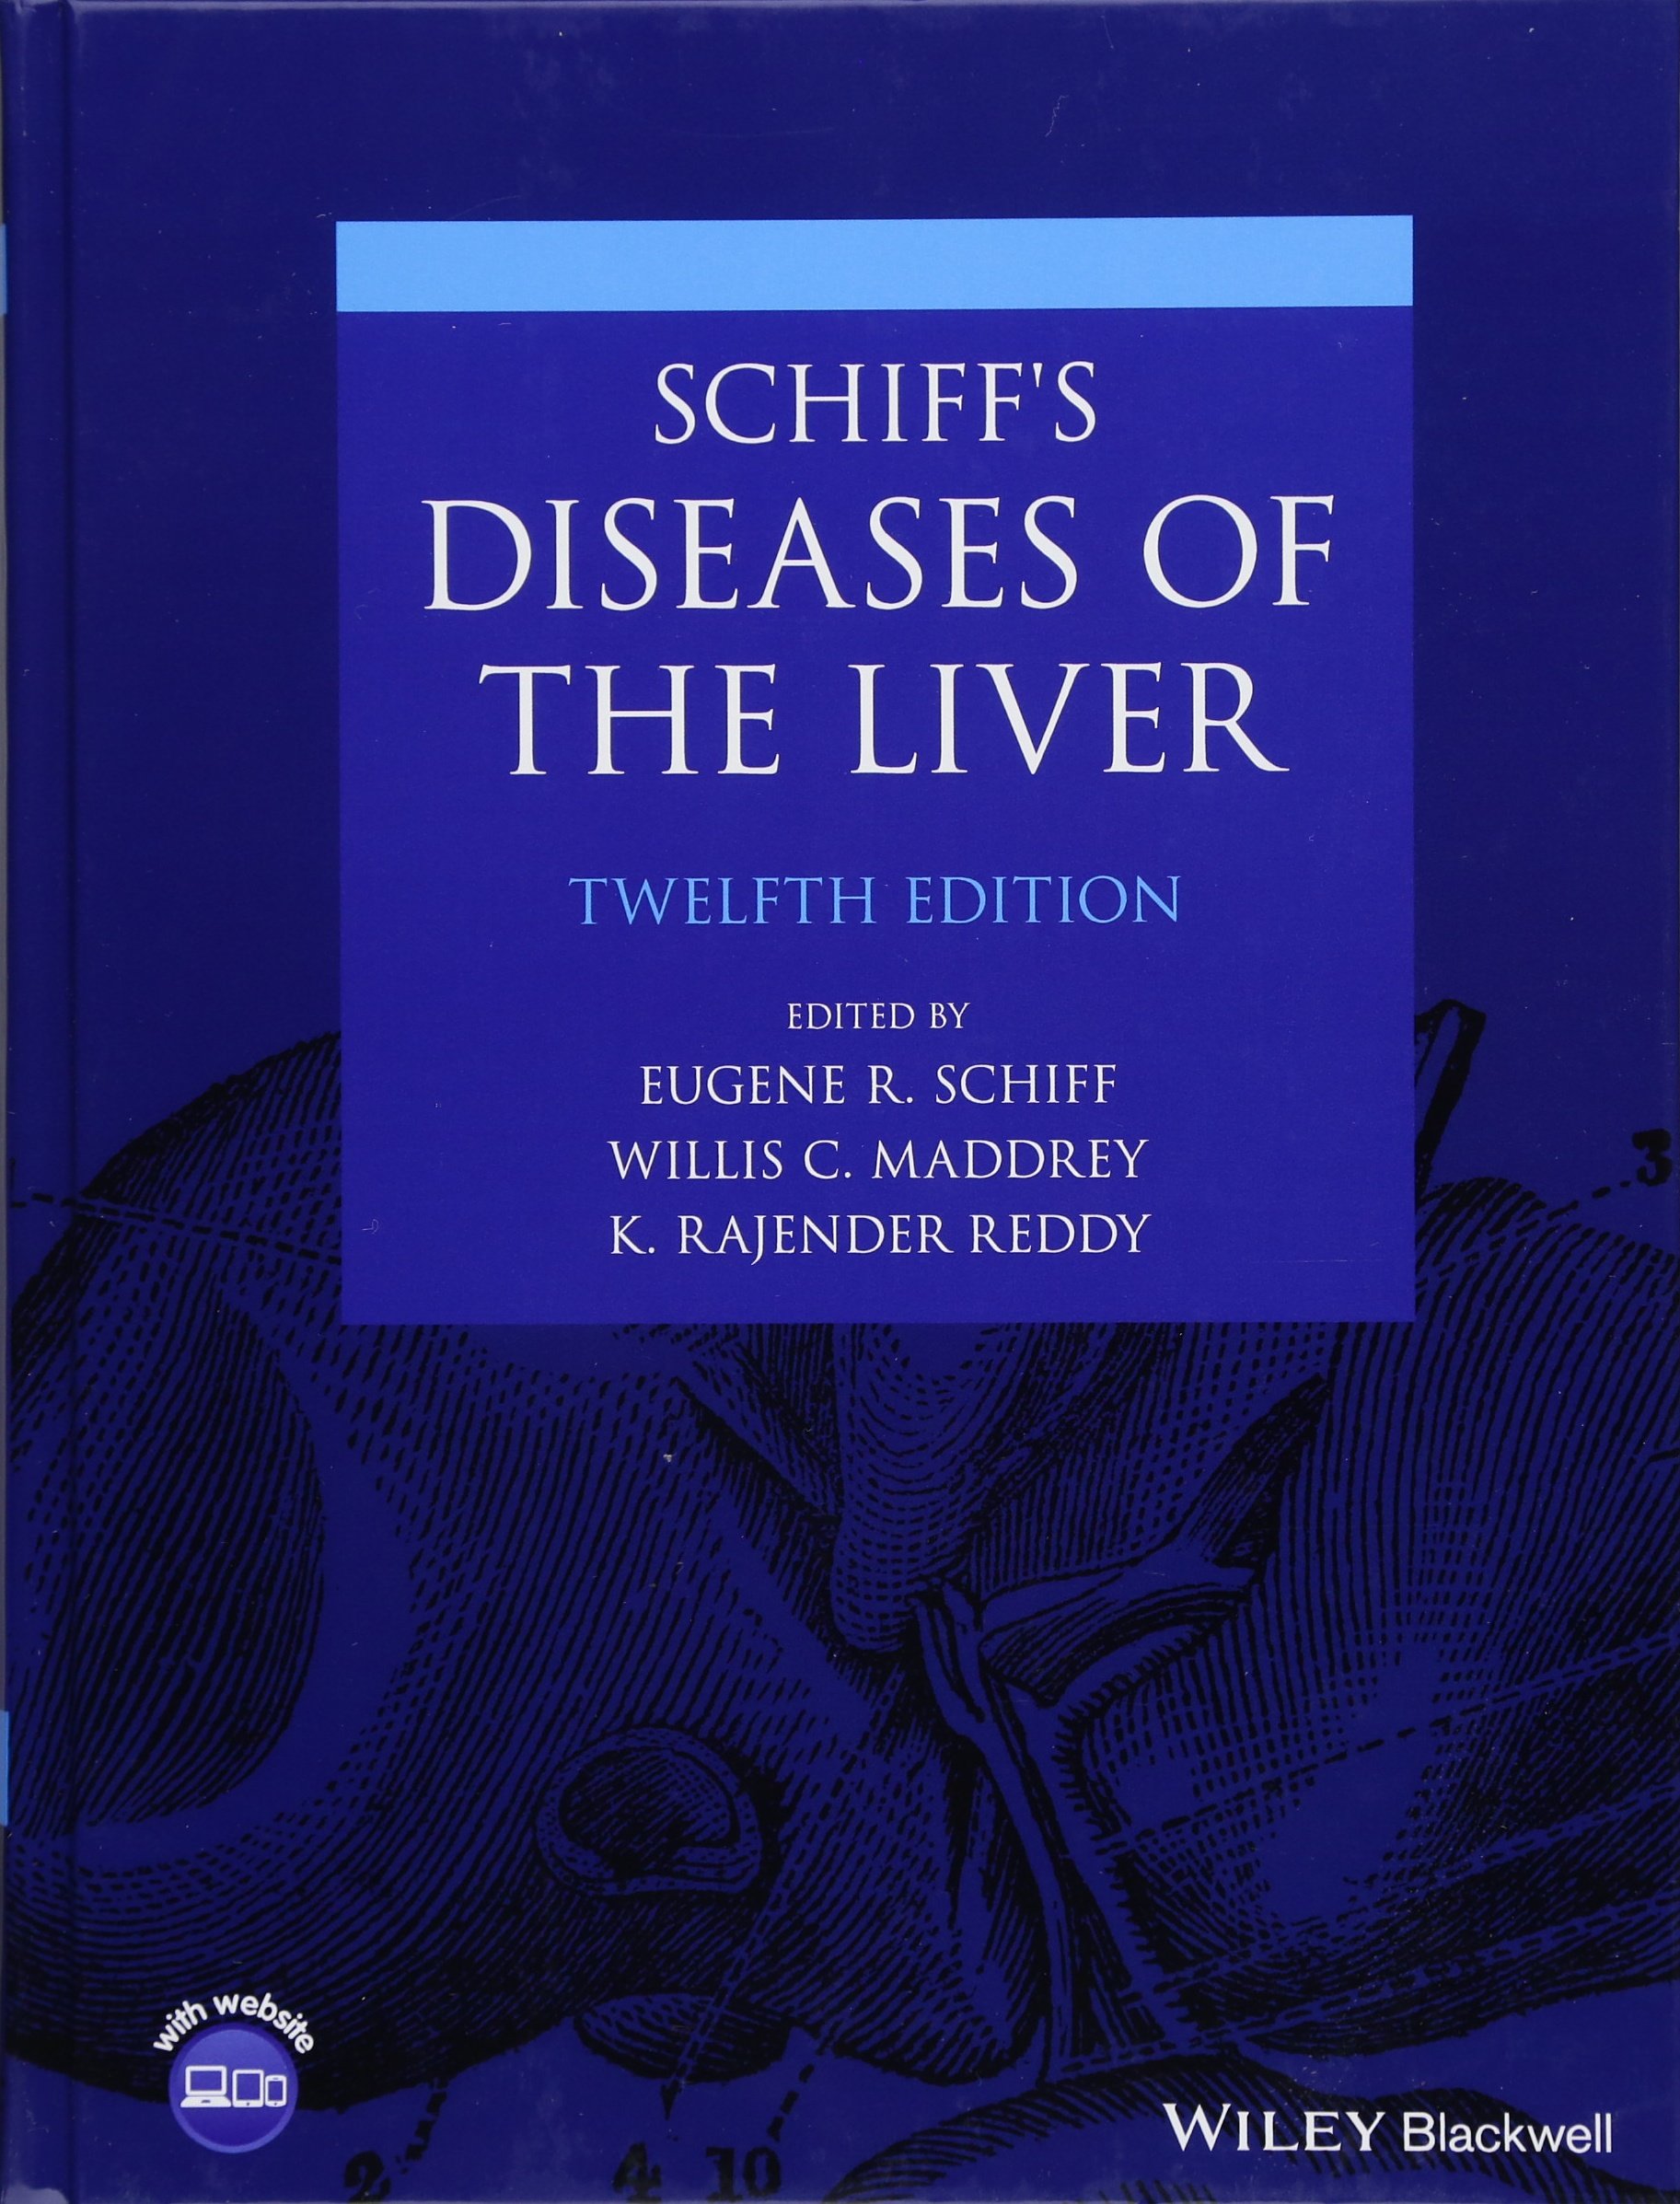 Schiff’s diseases of the liver